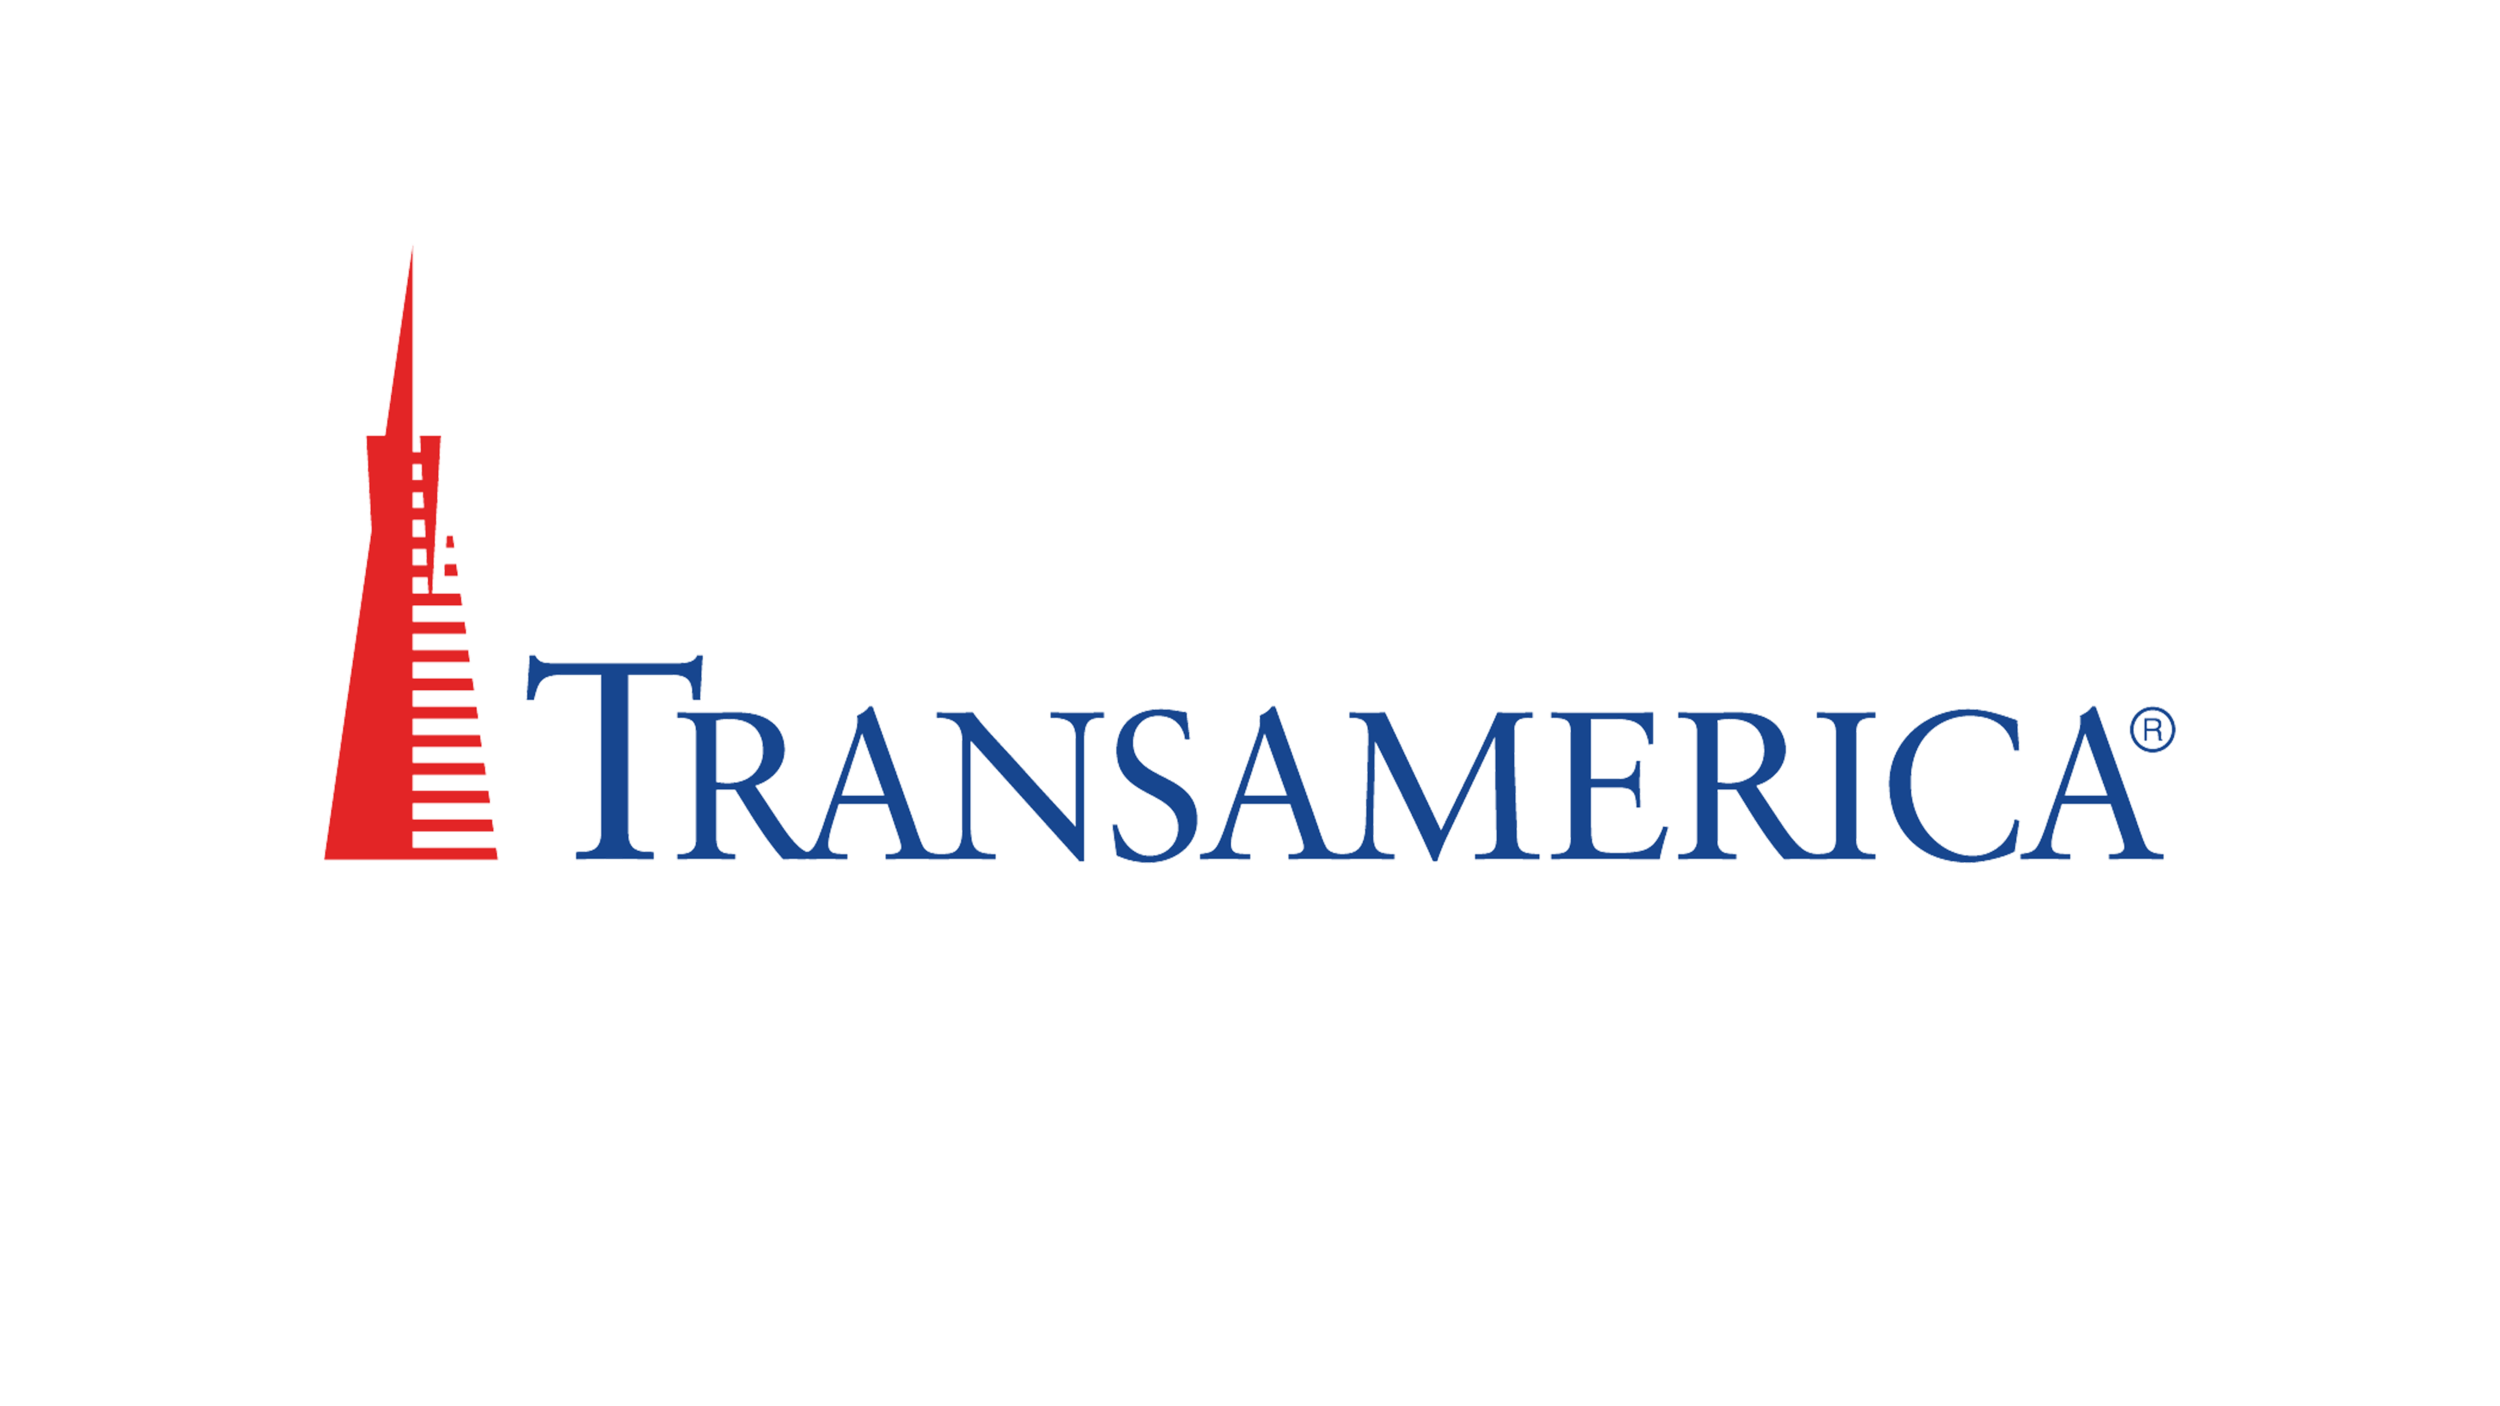 Transamerica logo